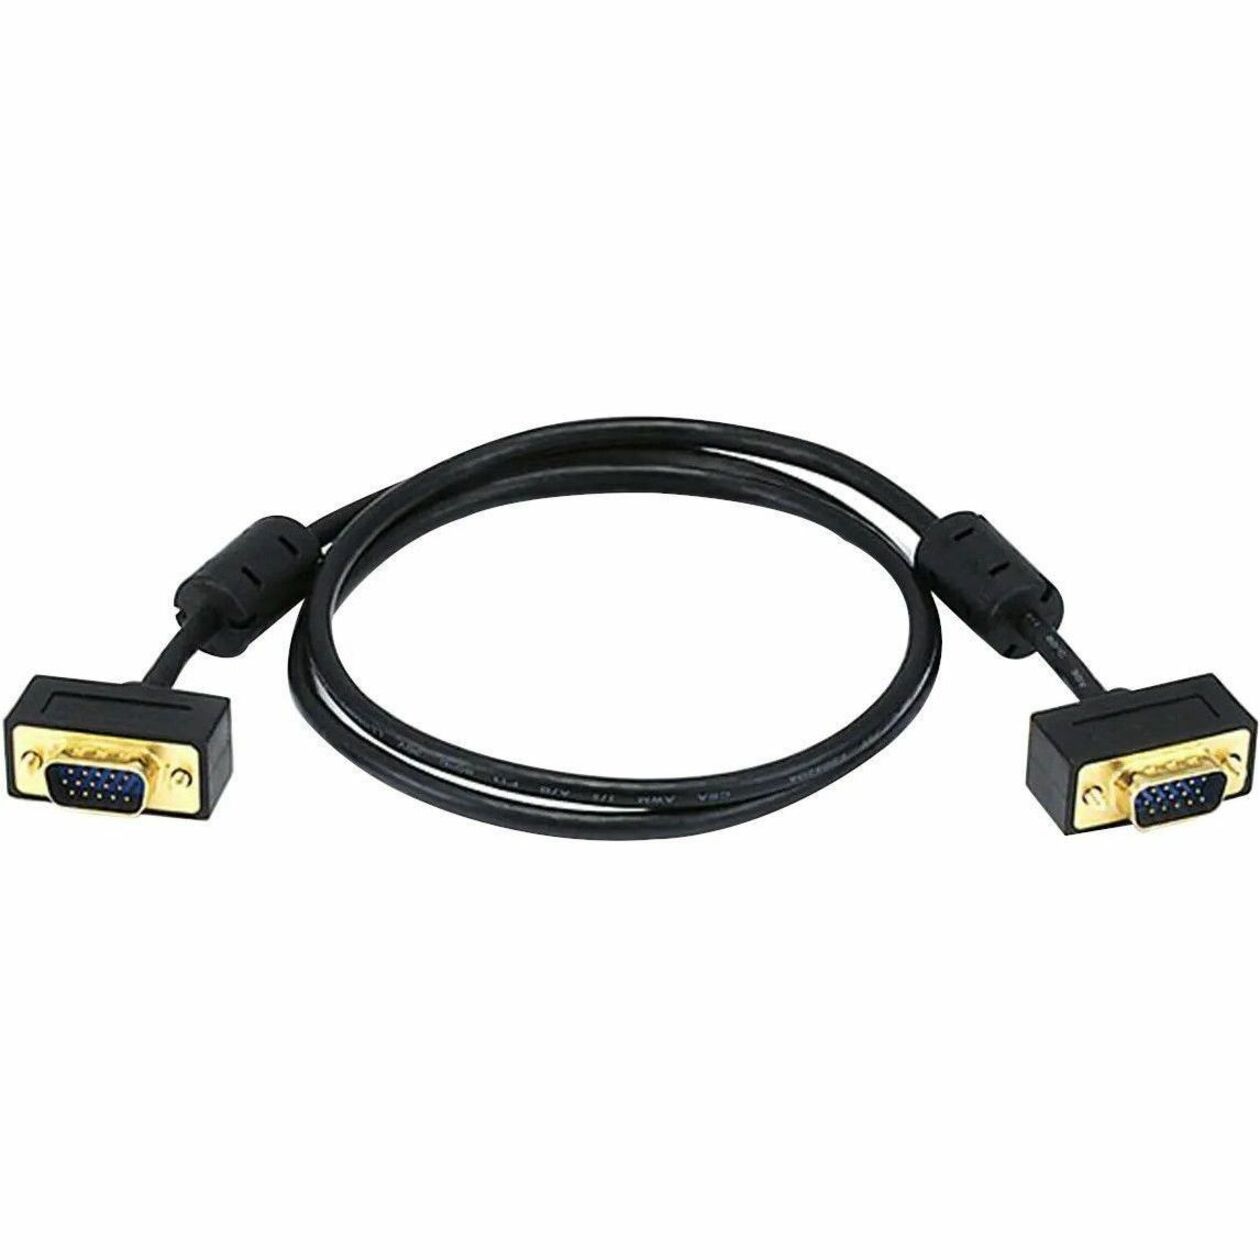 Monoprice Ultra Slim VGA Video Cable (6359)